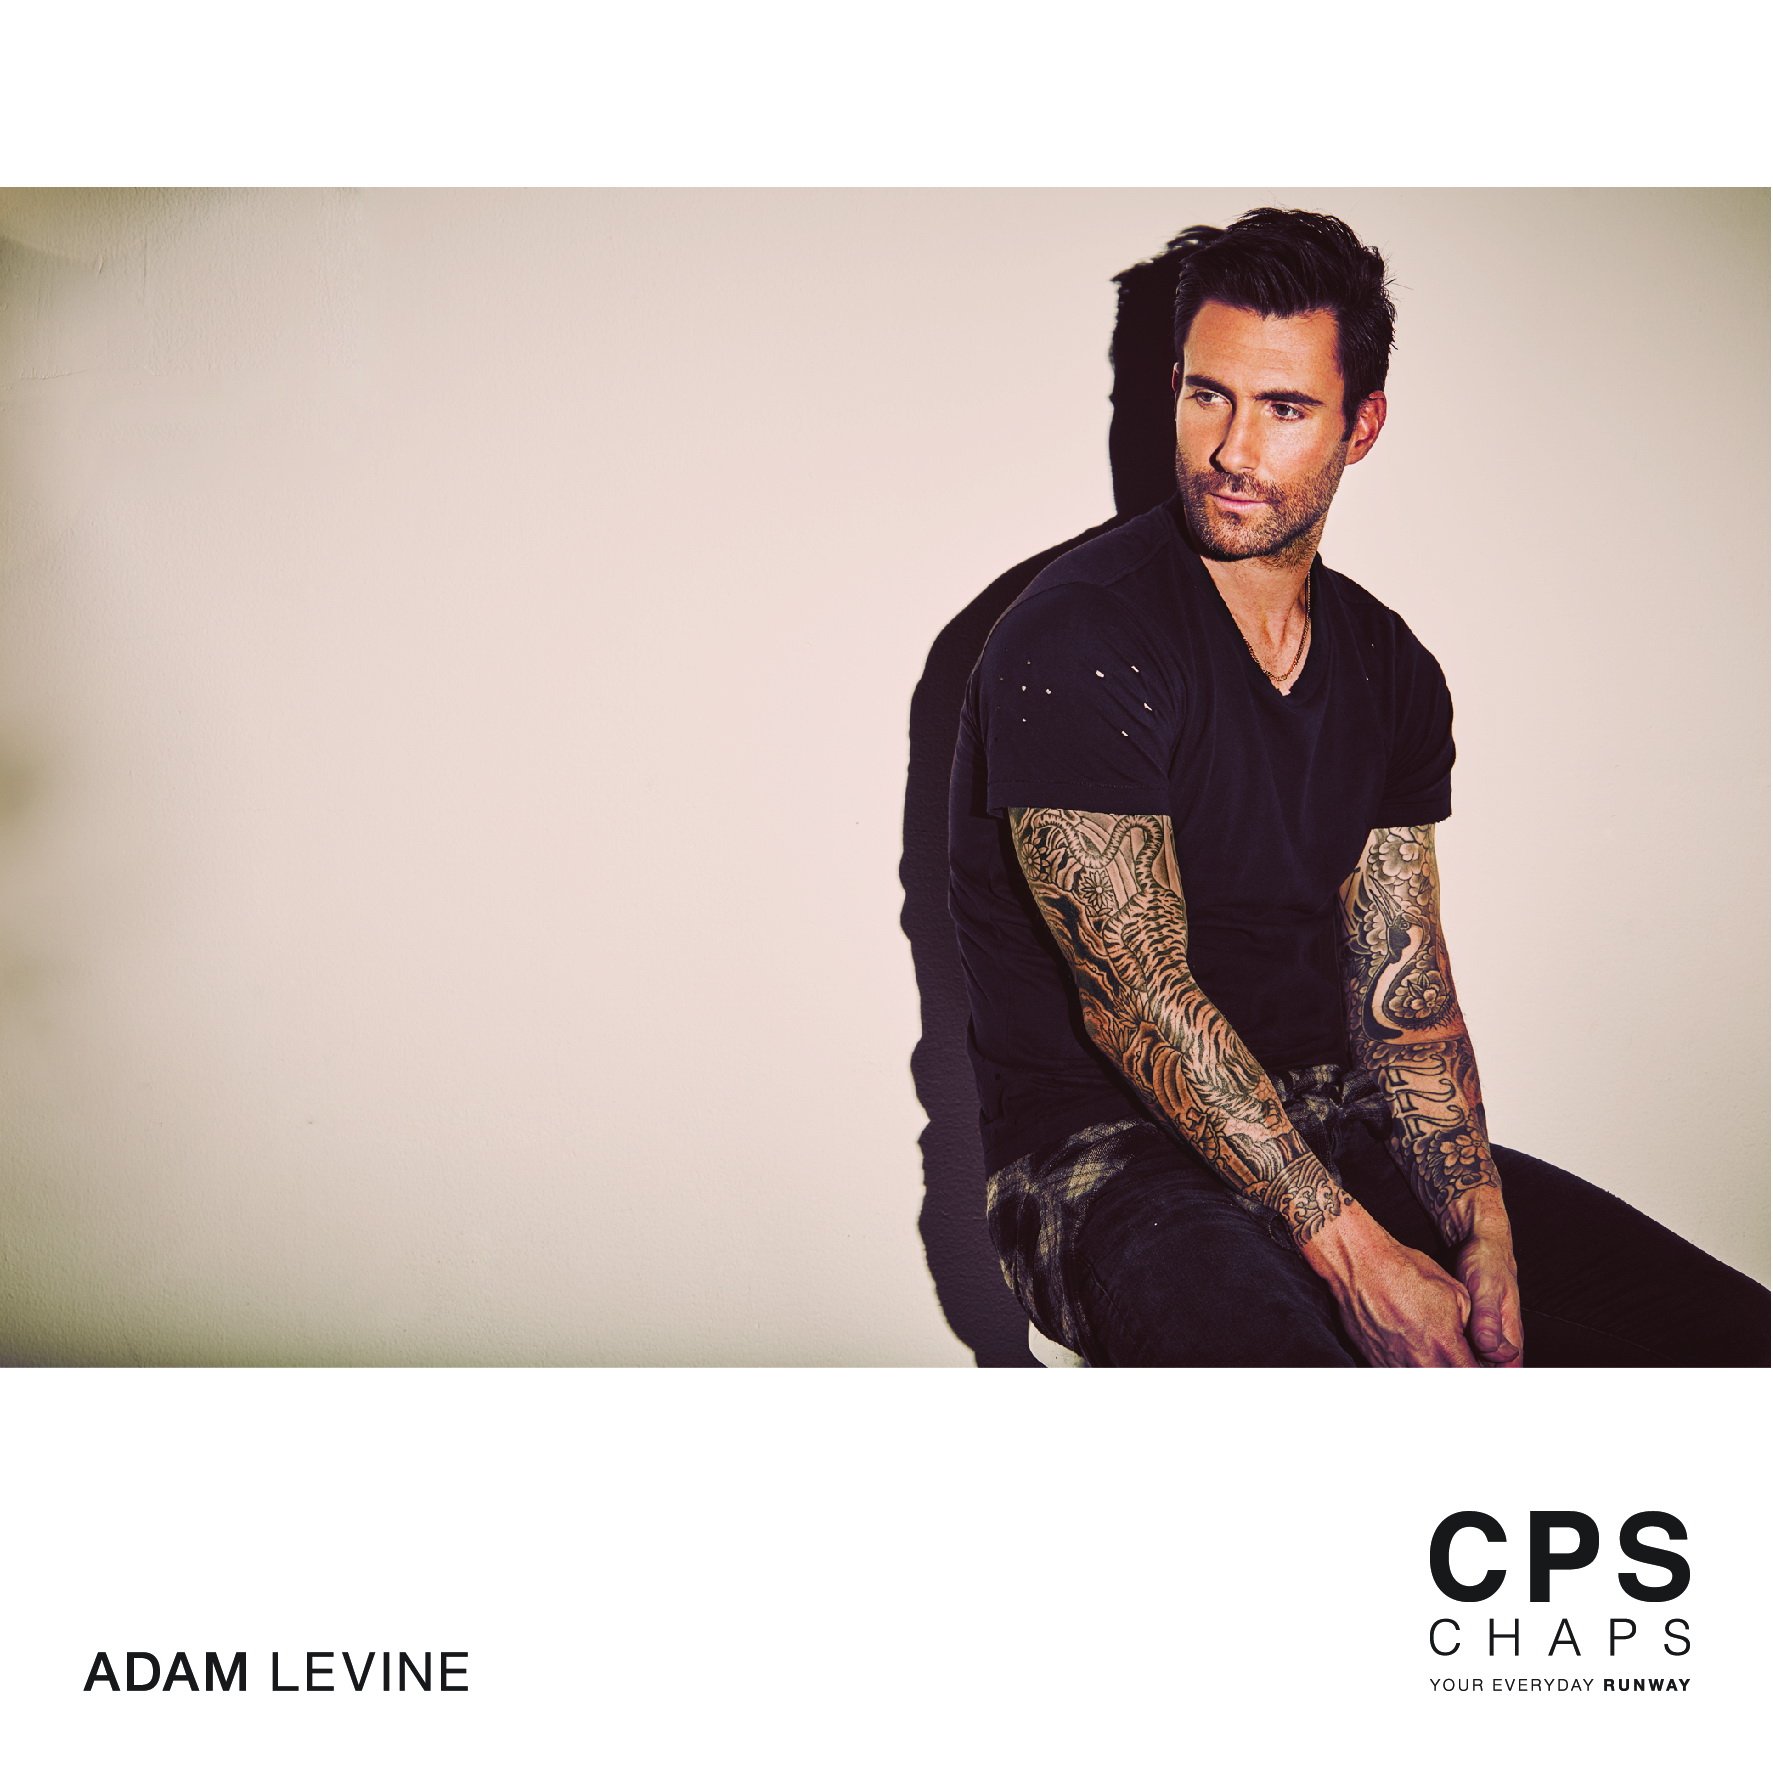 CPS CHAPS ช็อควงการแฟชั่นคว้า Adam Levine มาเป็นพรีเซ็นเตอร์                                                          